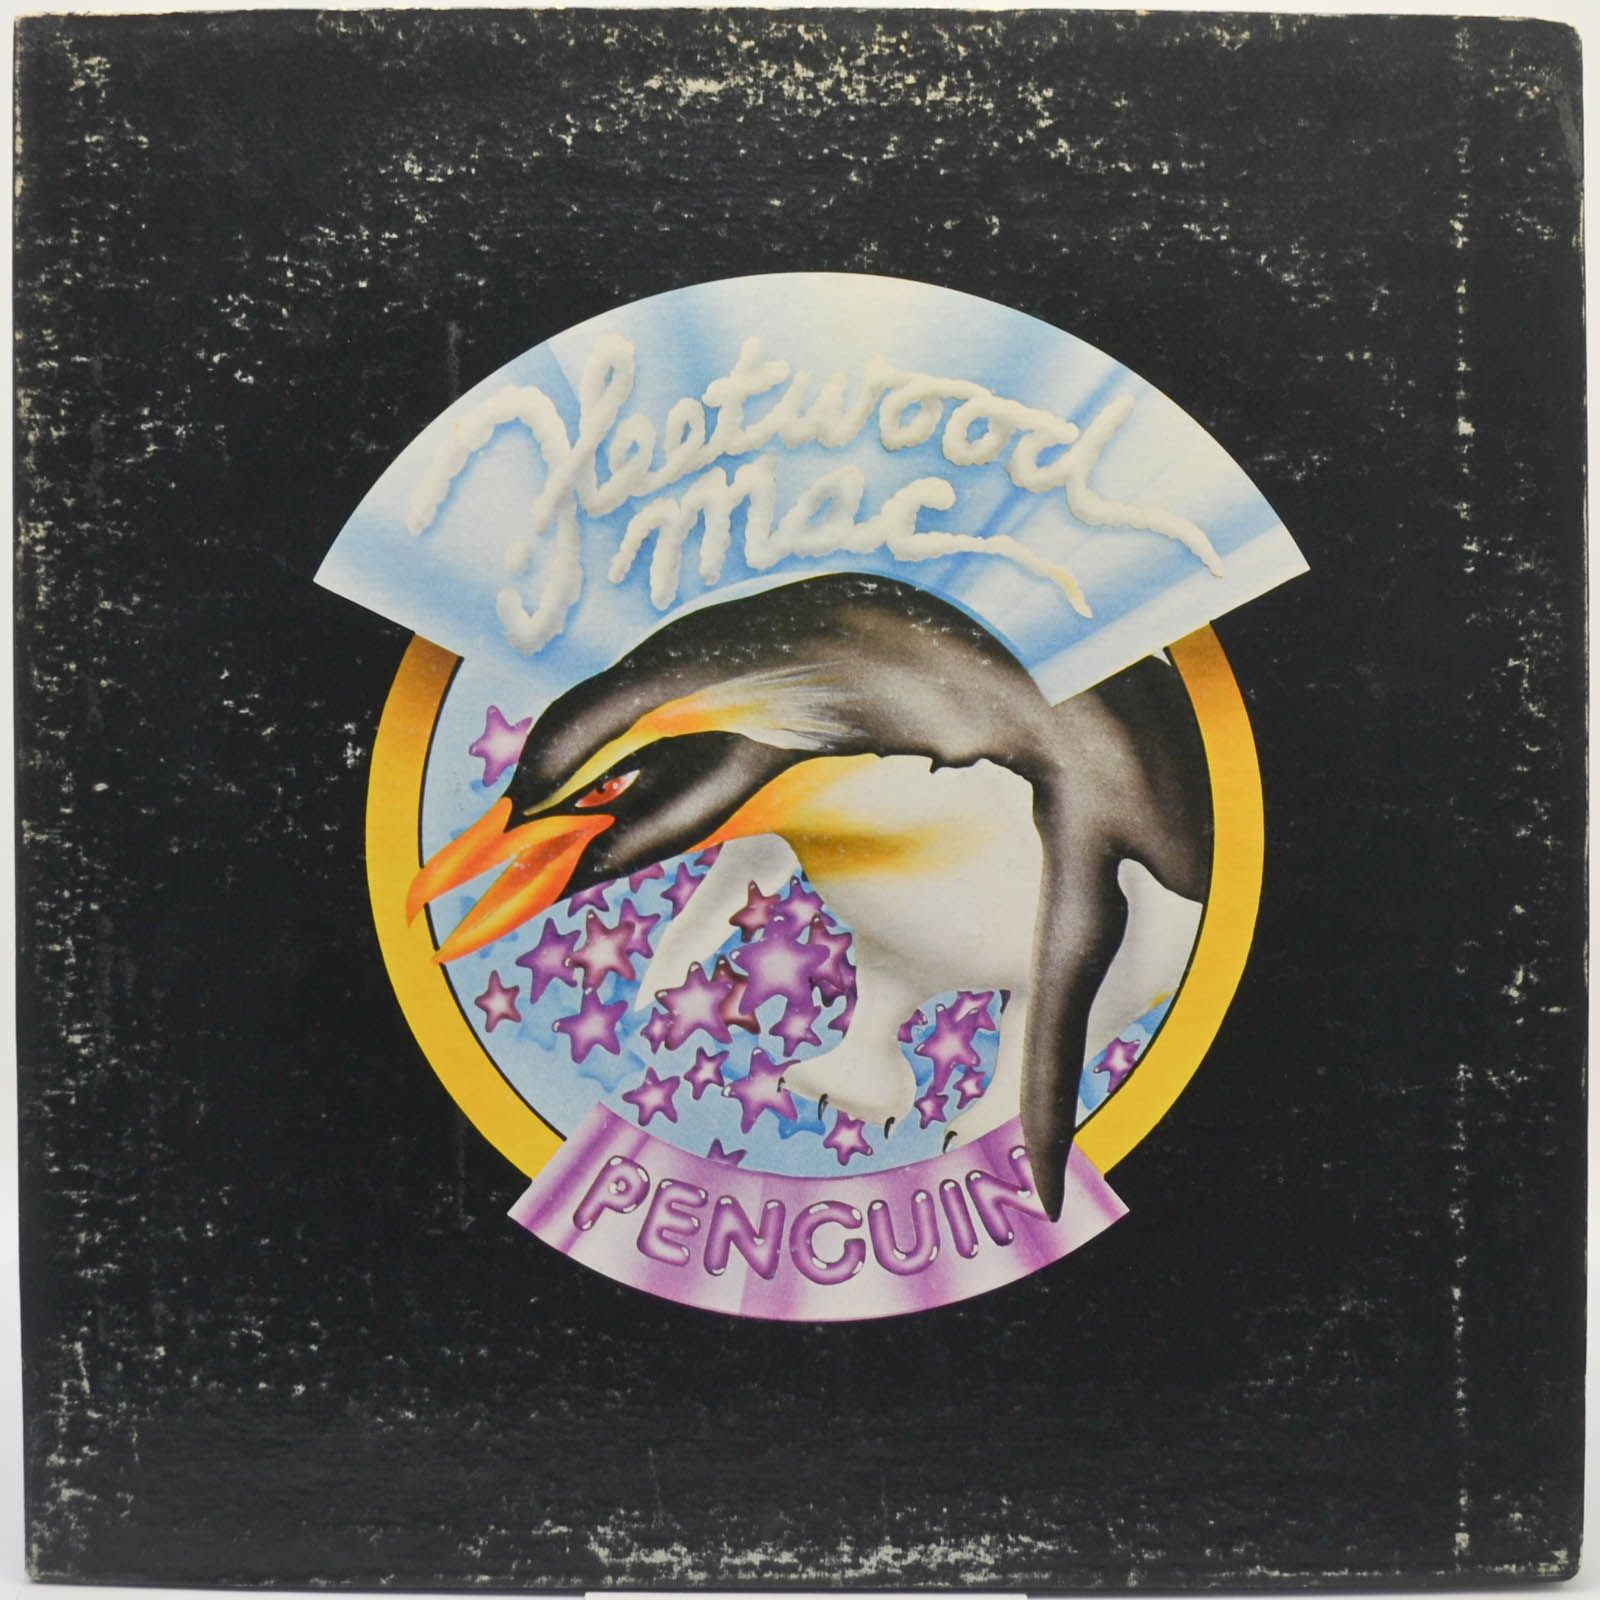 Fleetwood Mac — Penguin (USA), 1973